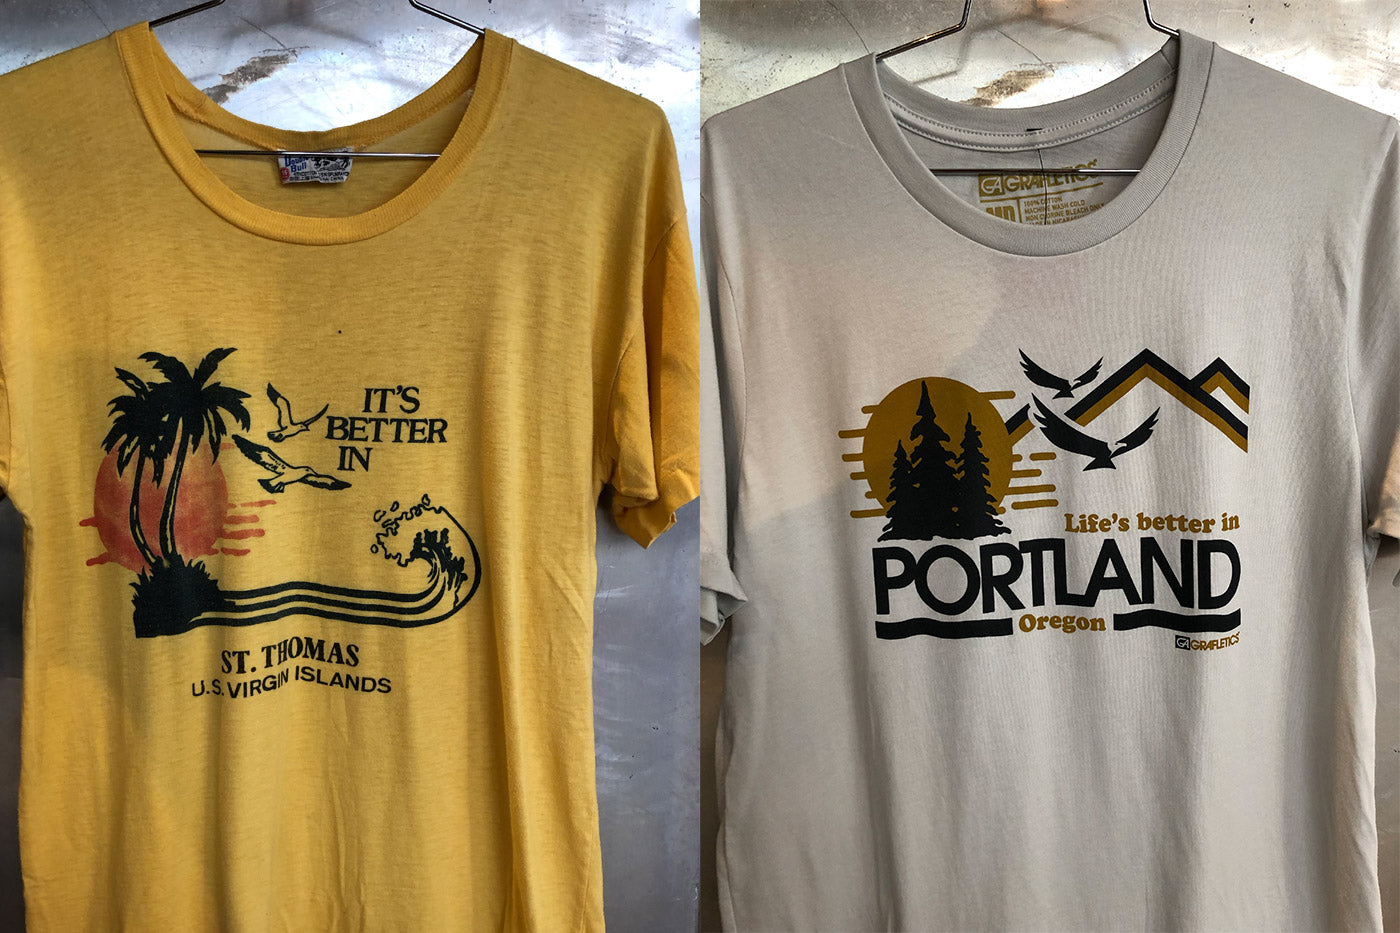 Life's Better in Portland T-Shirt by Grafletics